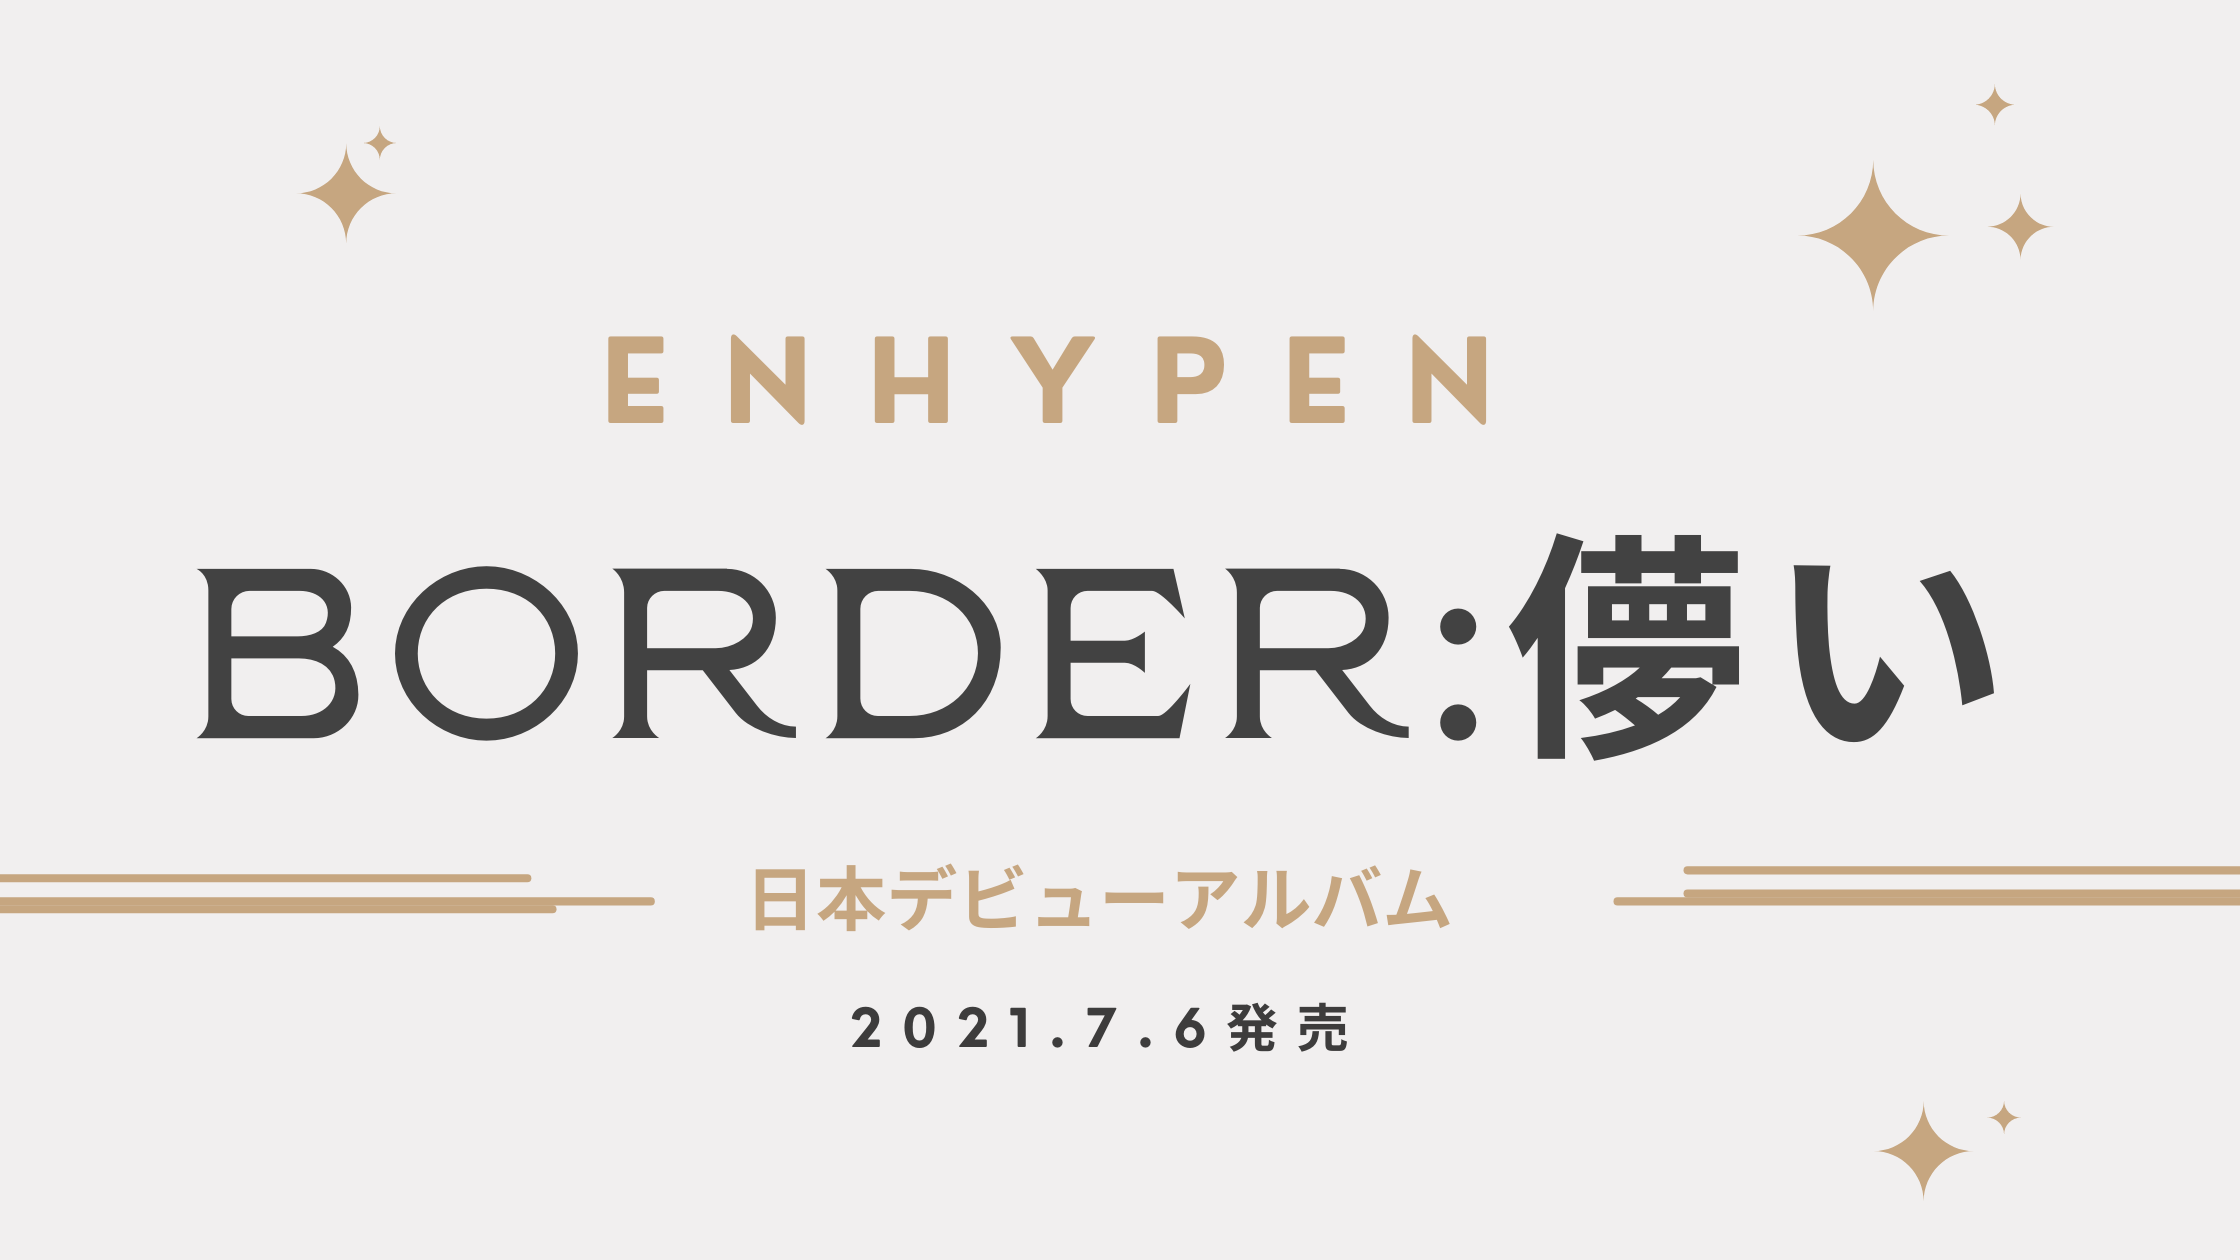 Enhypen 日本デビューシングル Border 儚い 特典の詳細と予約方法 7月6日発売 Shikaのひらめき